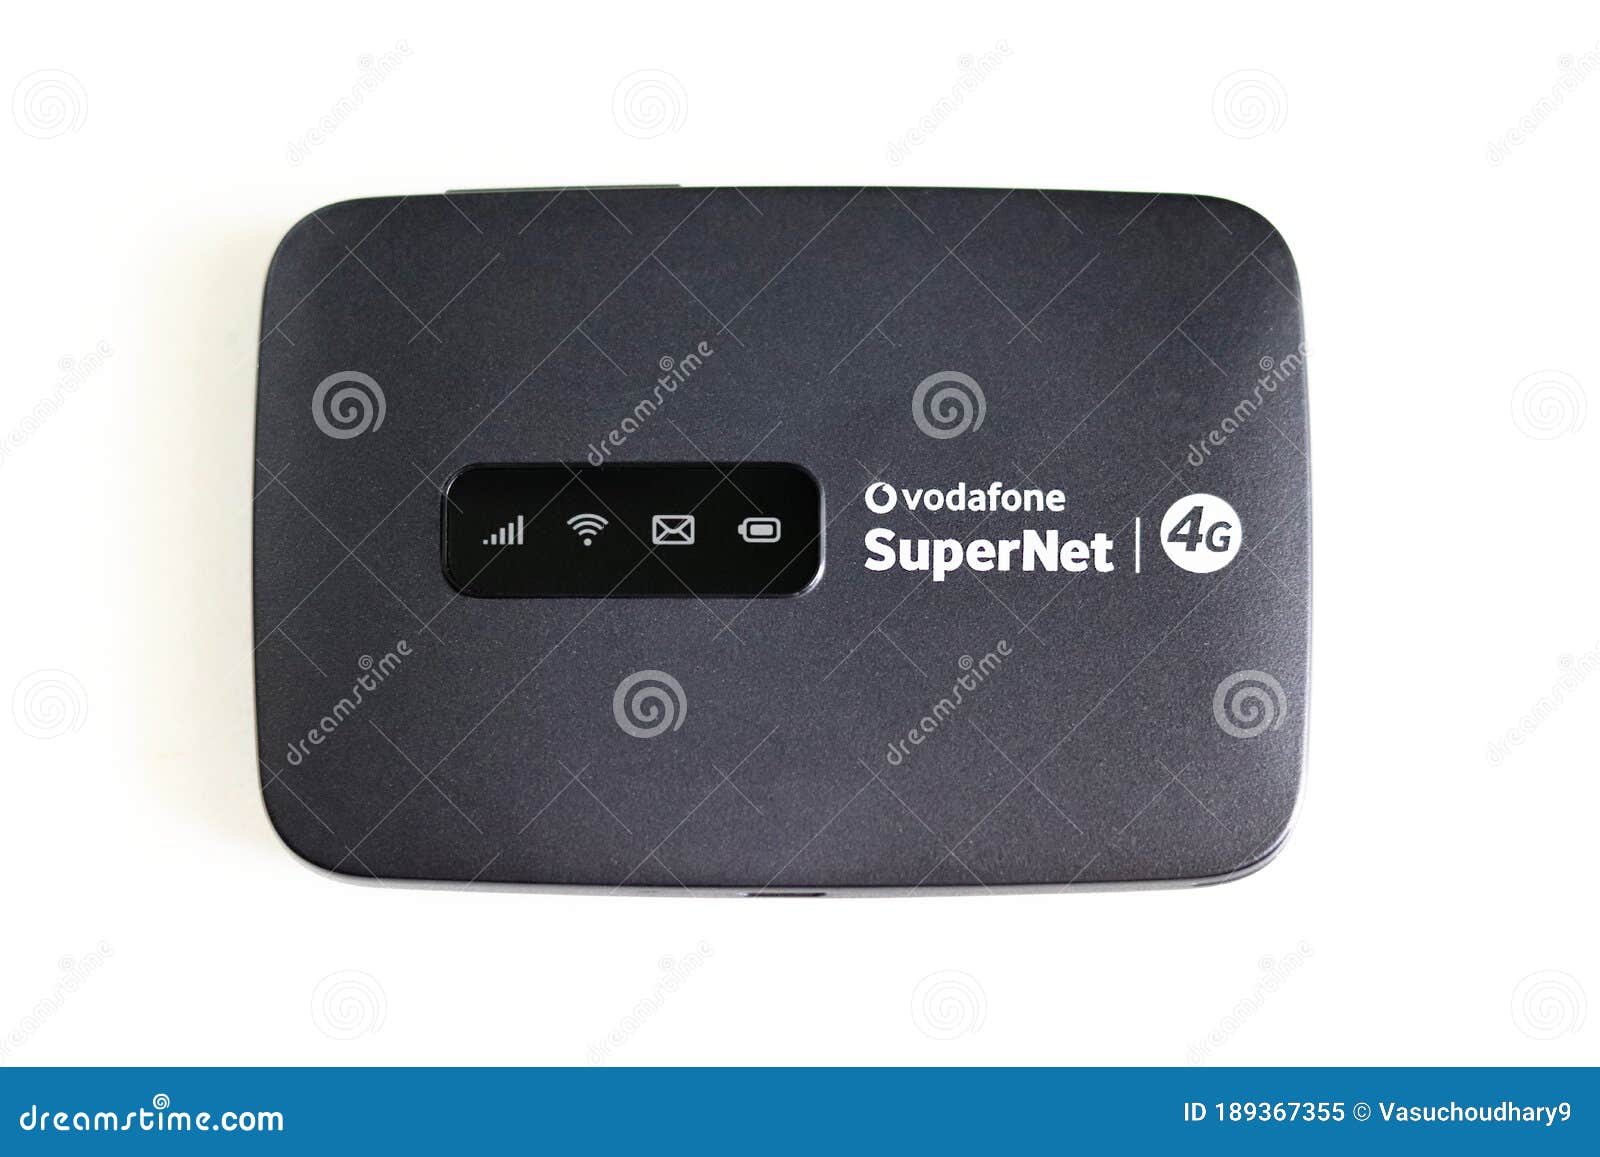 maskinskriver regnskyl klæde Vodafone SuperNet WiFi Hotspot MiFi 4G Device Isolated Closeup Editorial  Image - Image of device, lightweight: 189367355